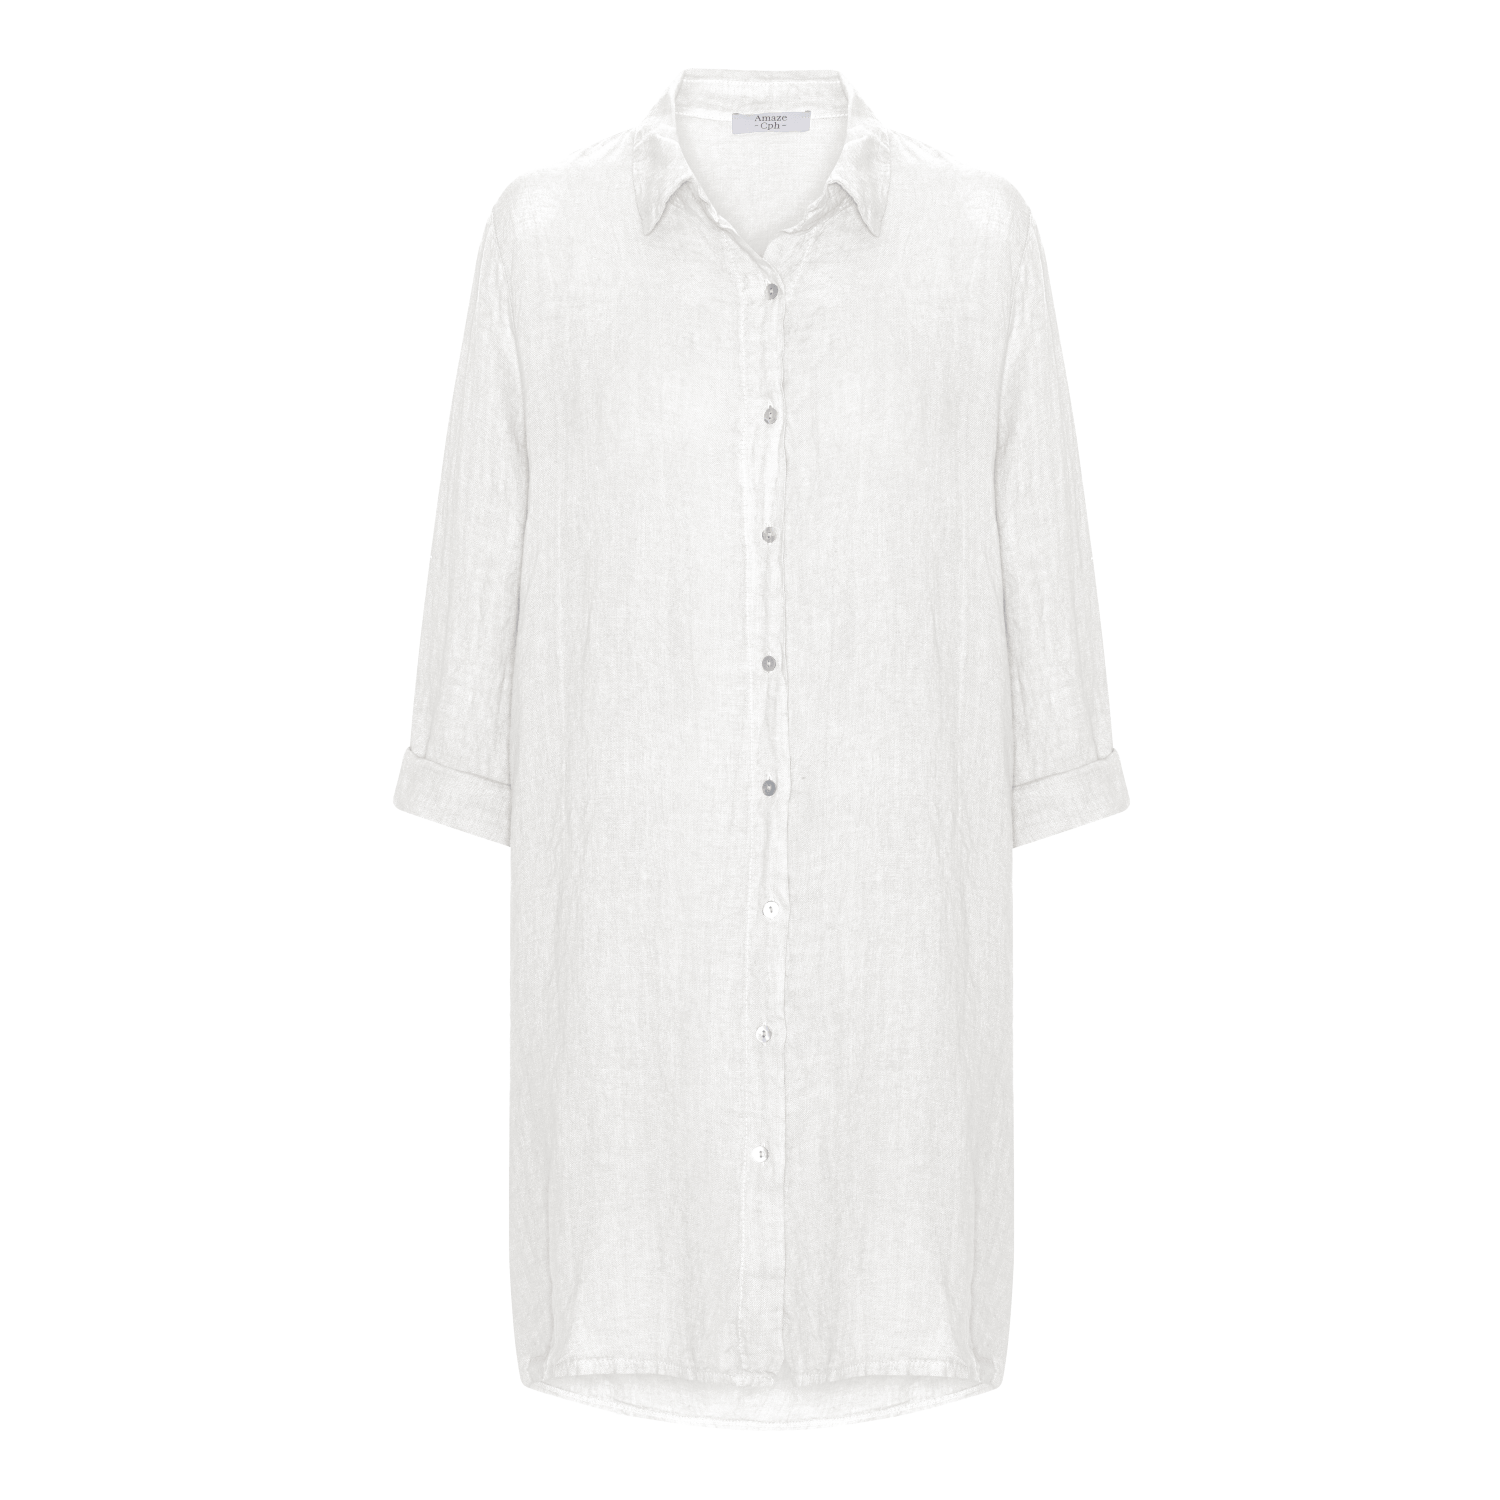 Long Linen Shirt - White - Amaze Cph - White - S/M